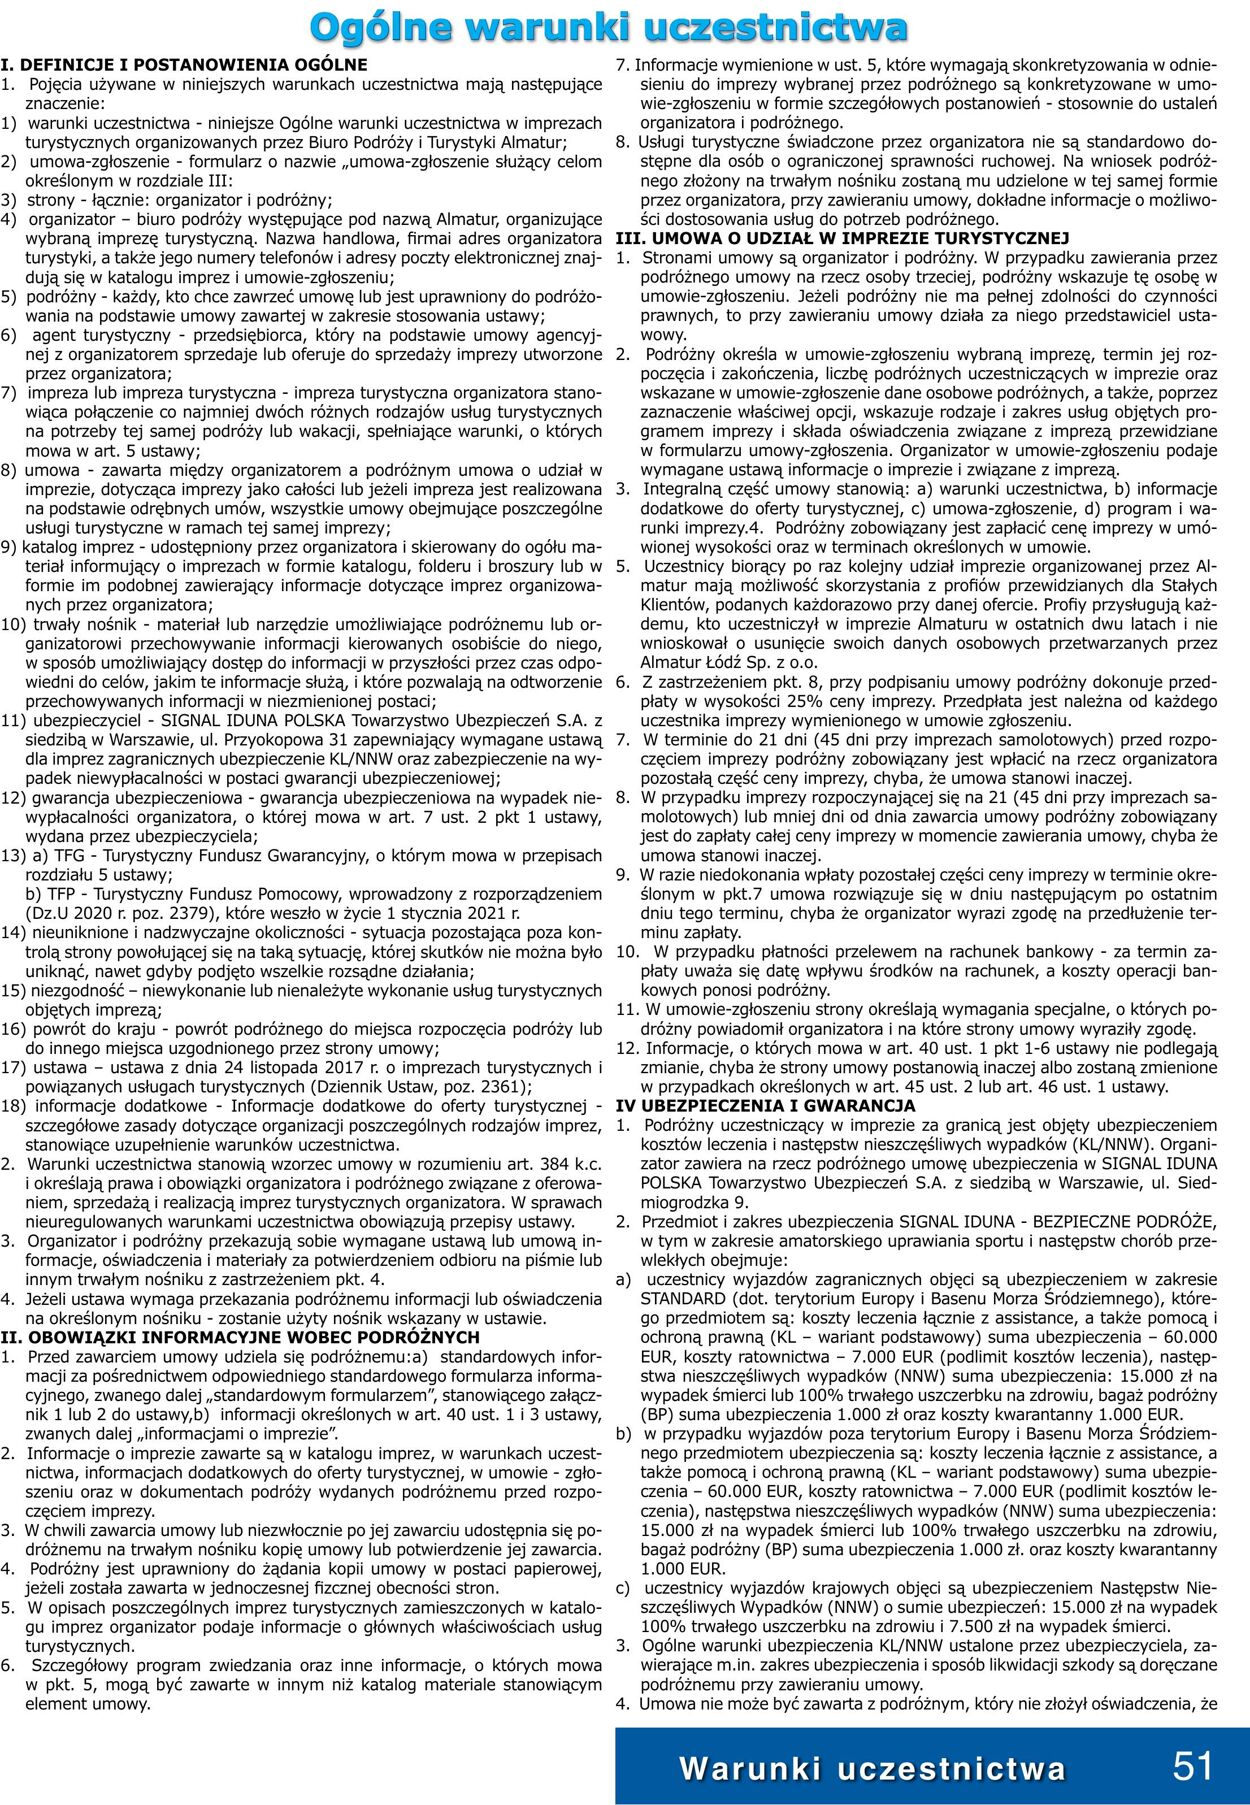 Gazetka Almatur 21.03.2022 - 31.08.2022